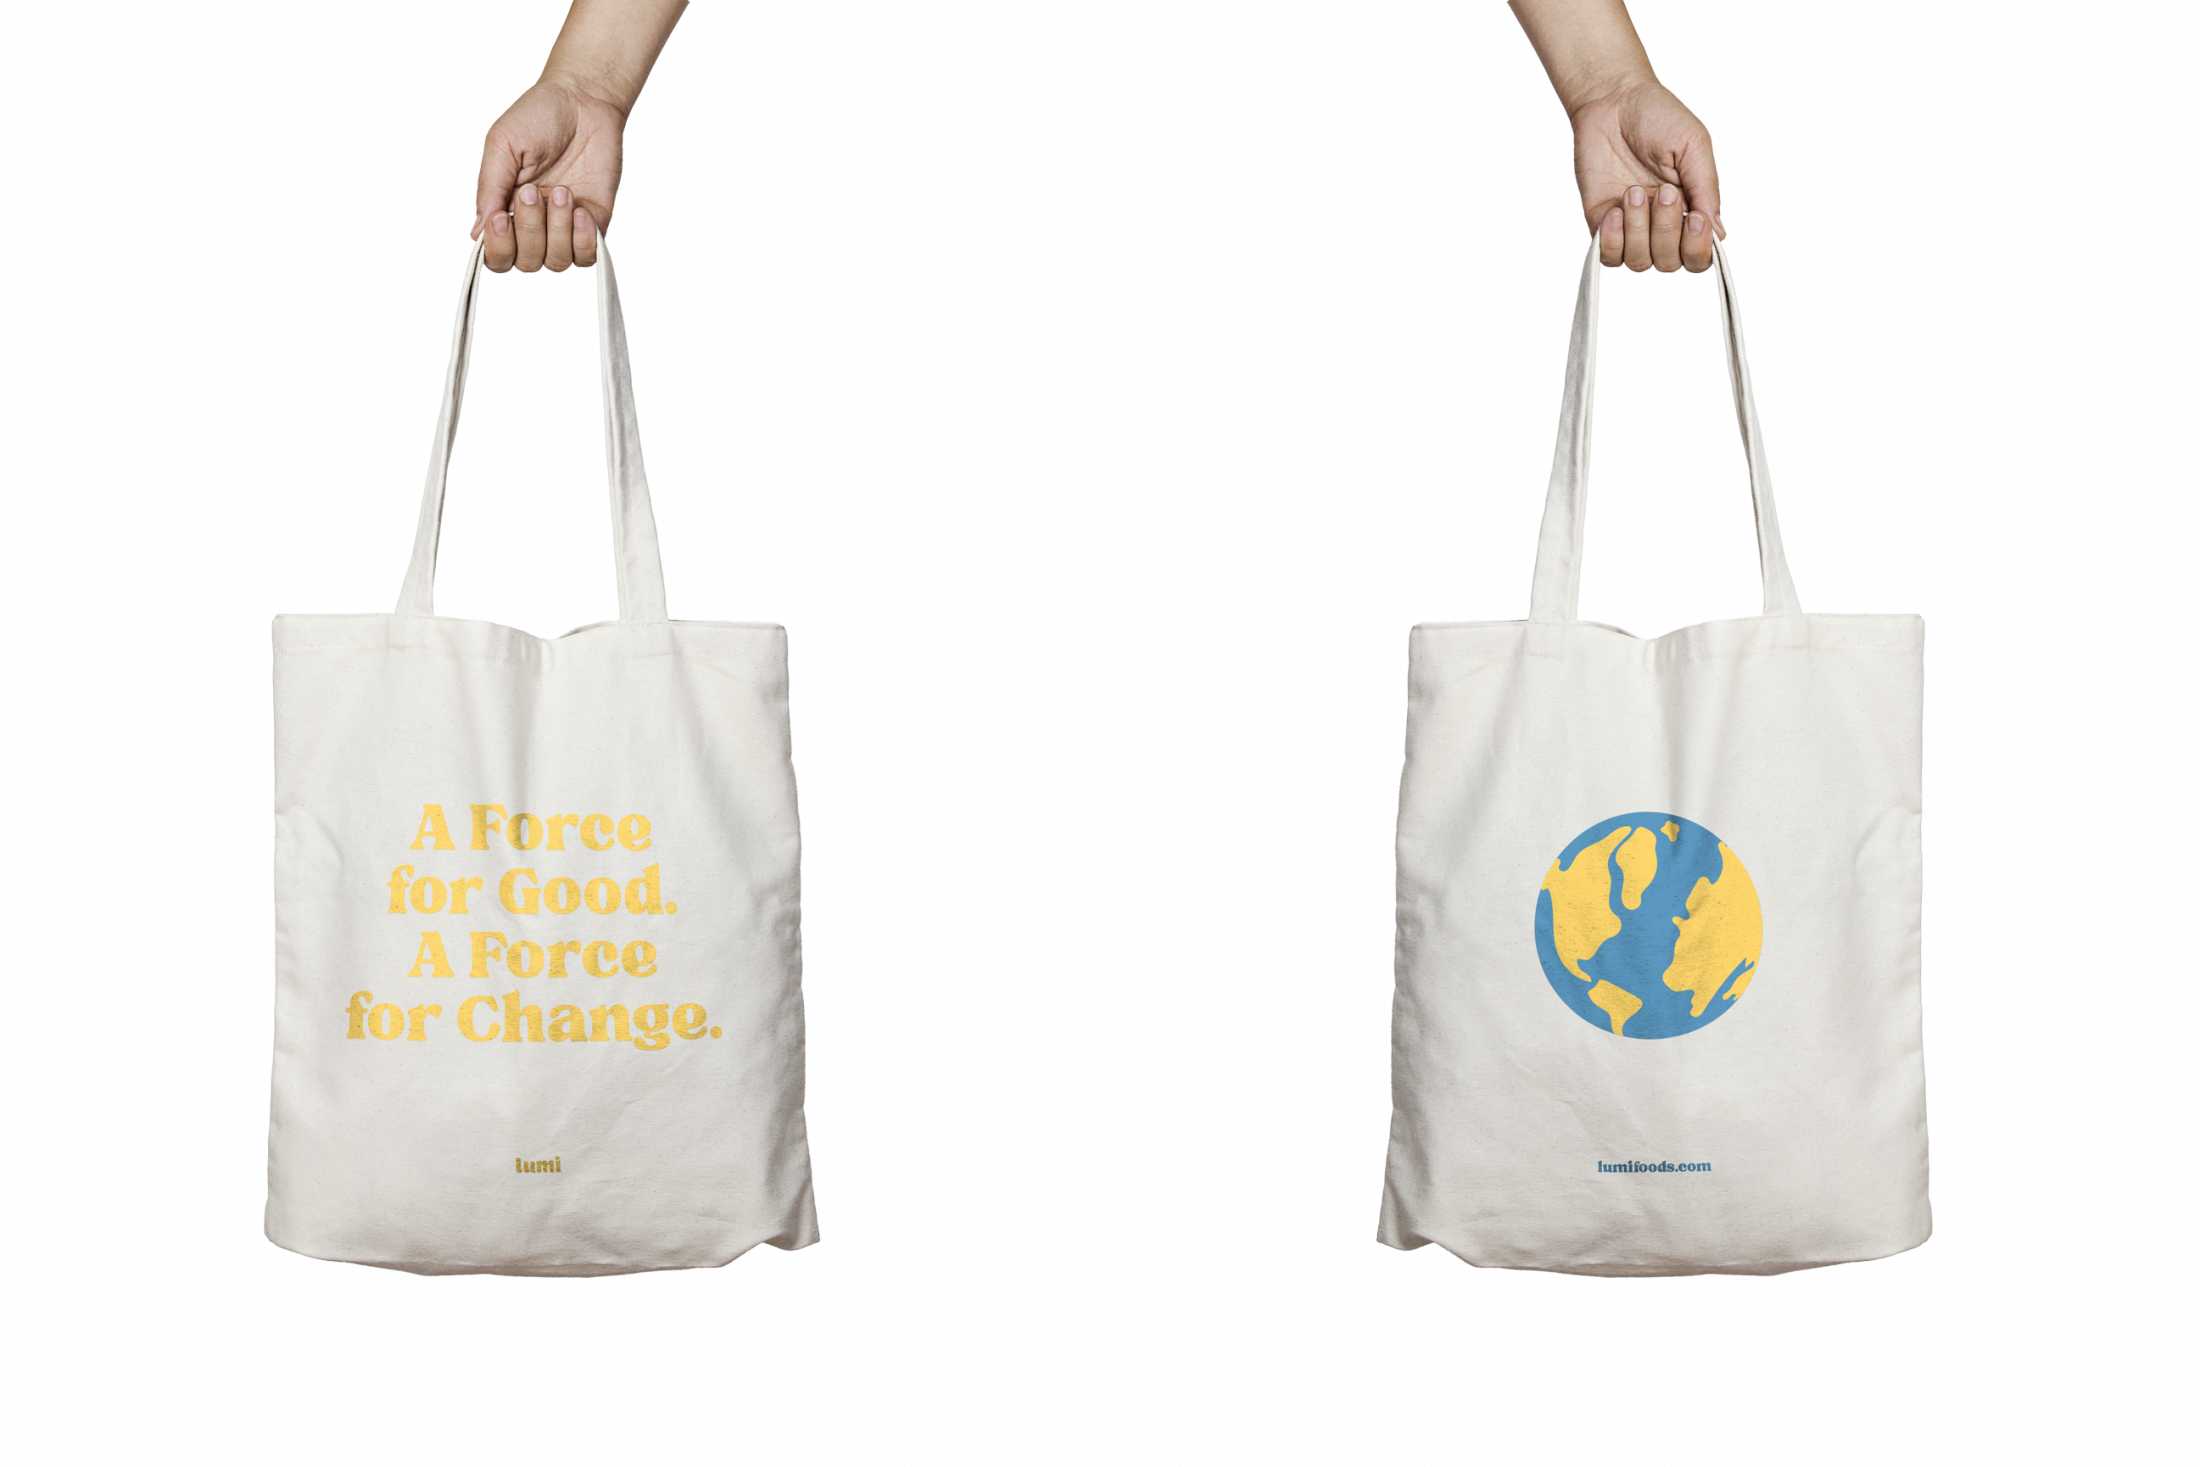 Merchandise tote bag design for vegan dairy brand Lumi.